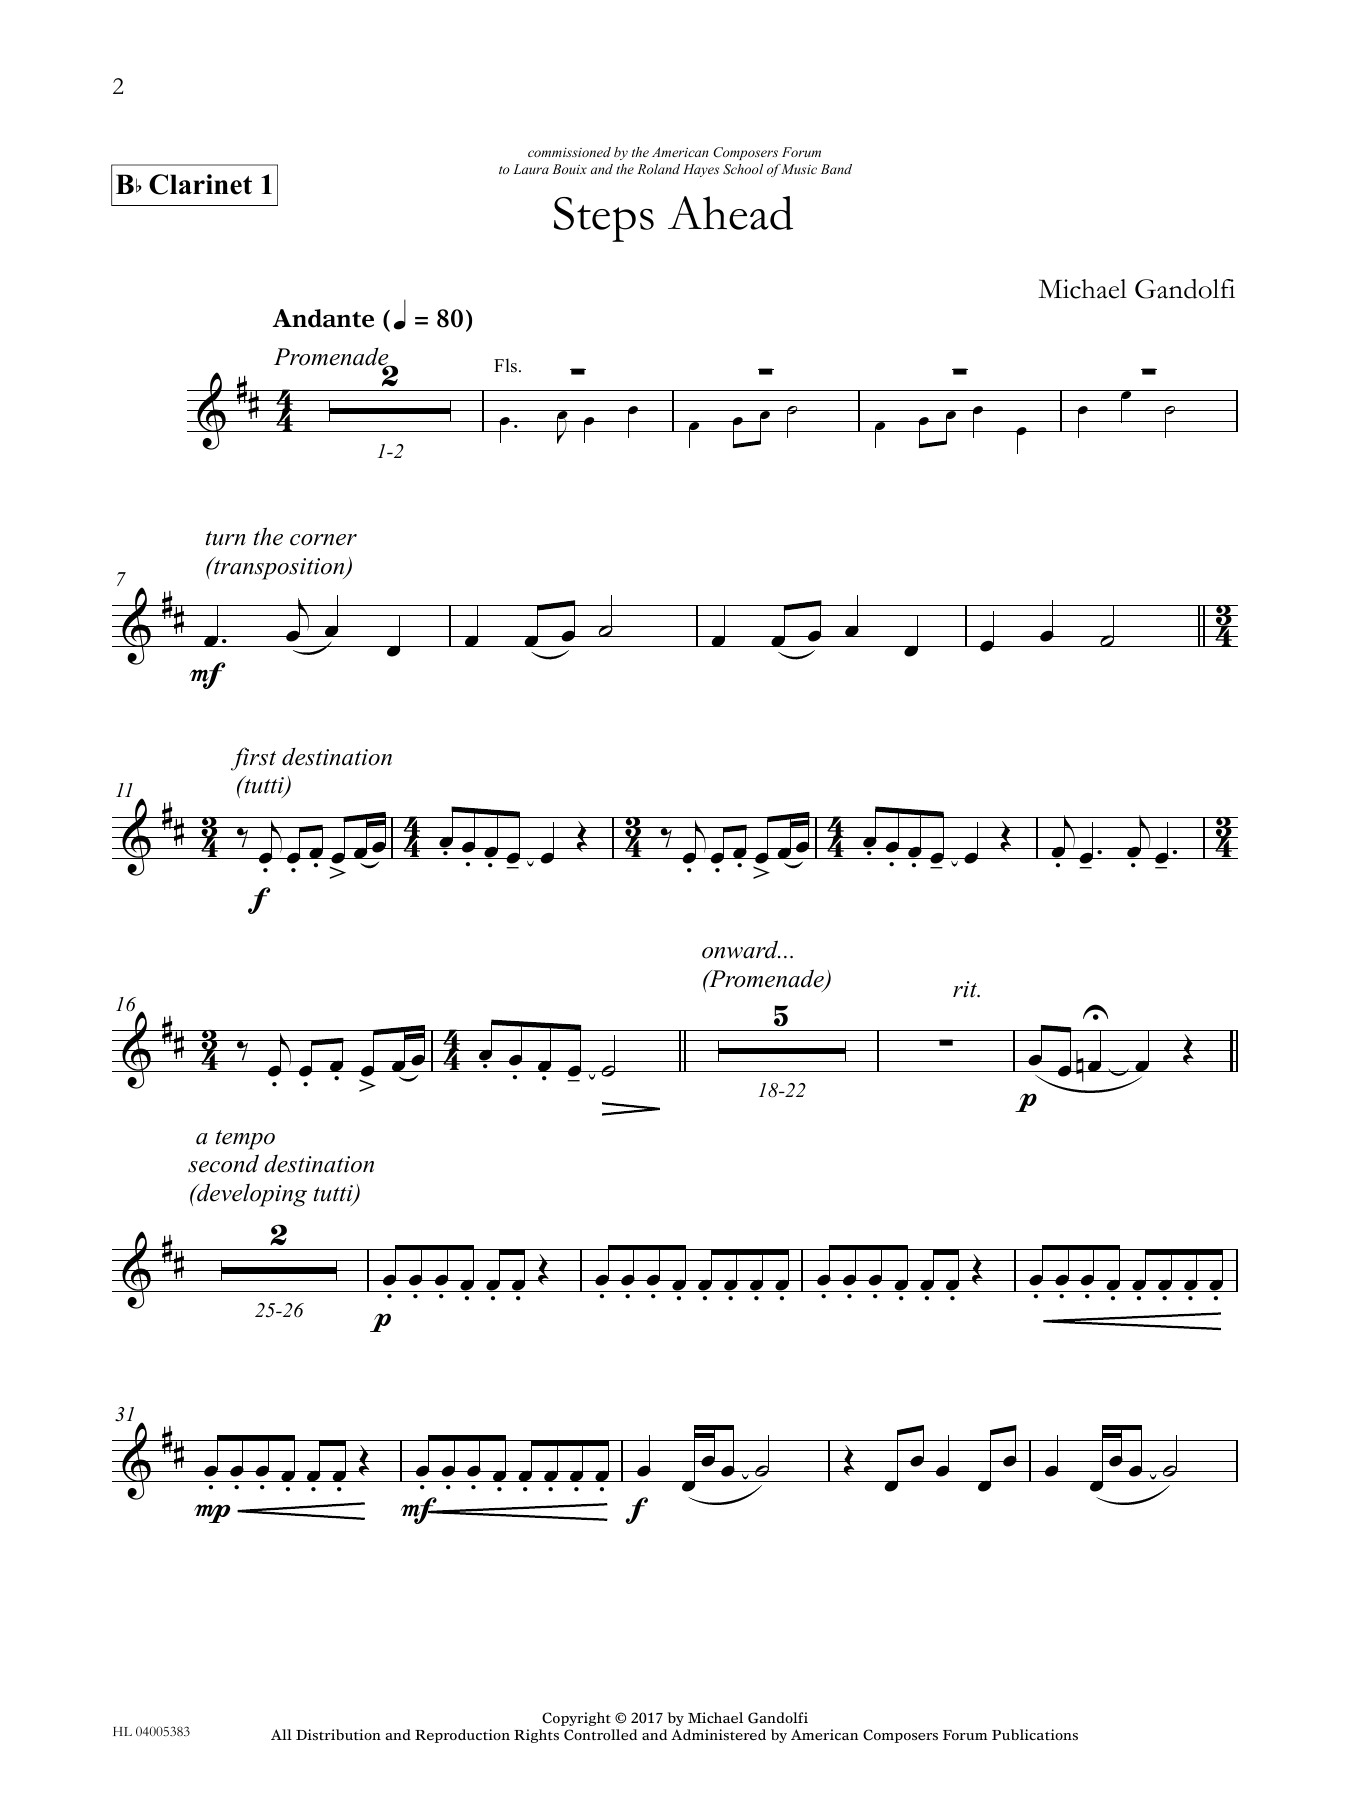 Download Michael Gandolfi Steps Ahead - Bb Clarinet 1 Sheet Music